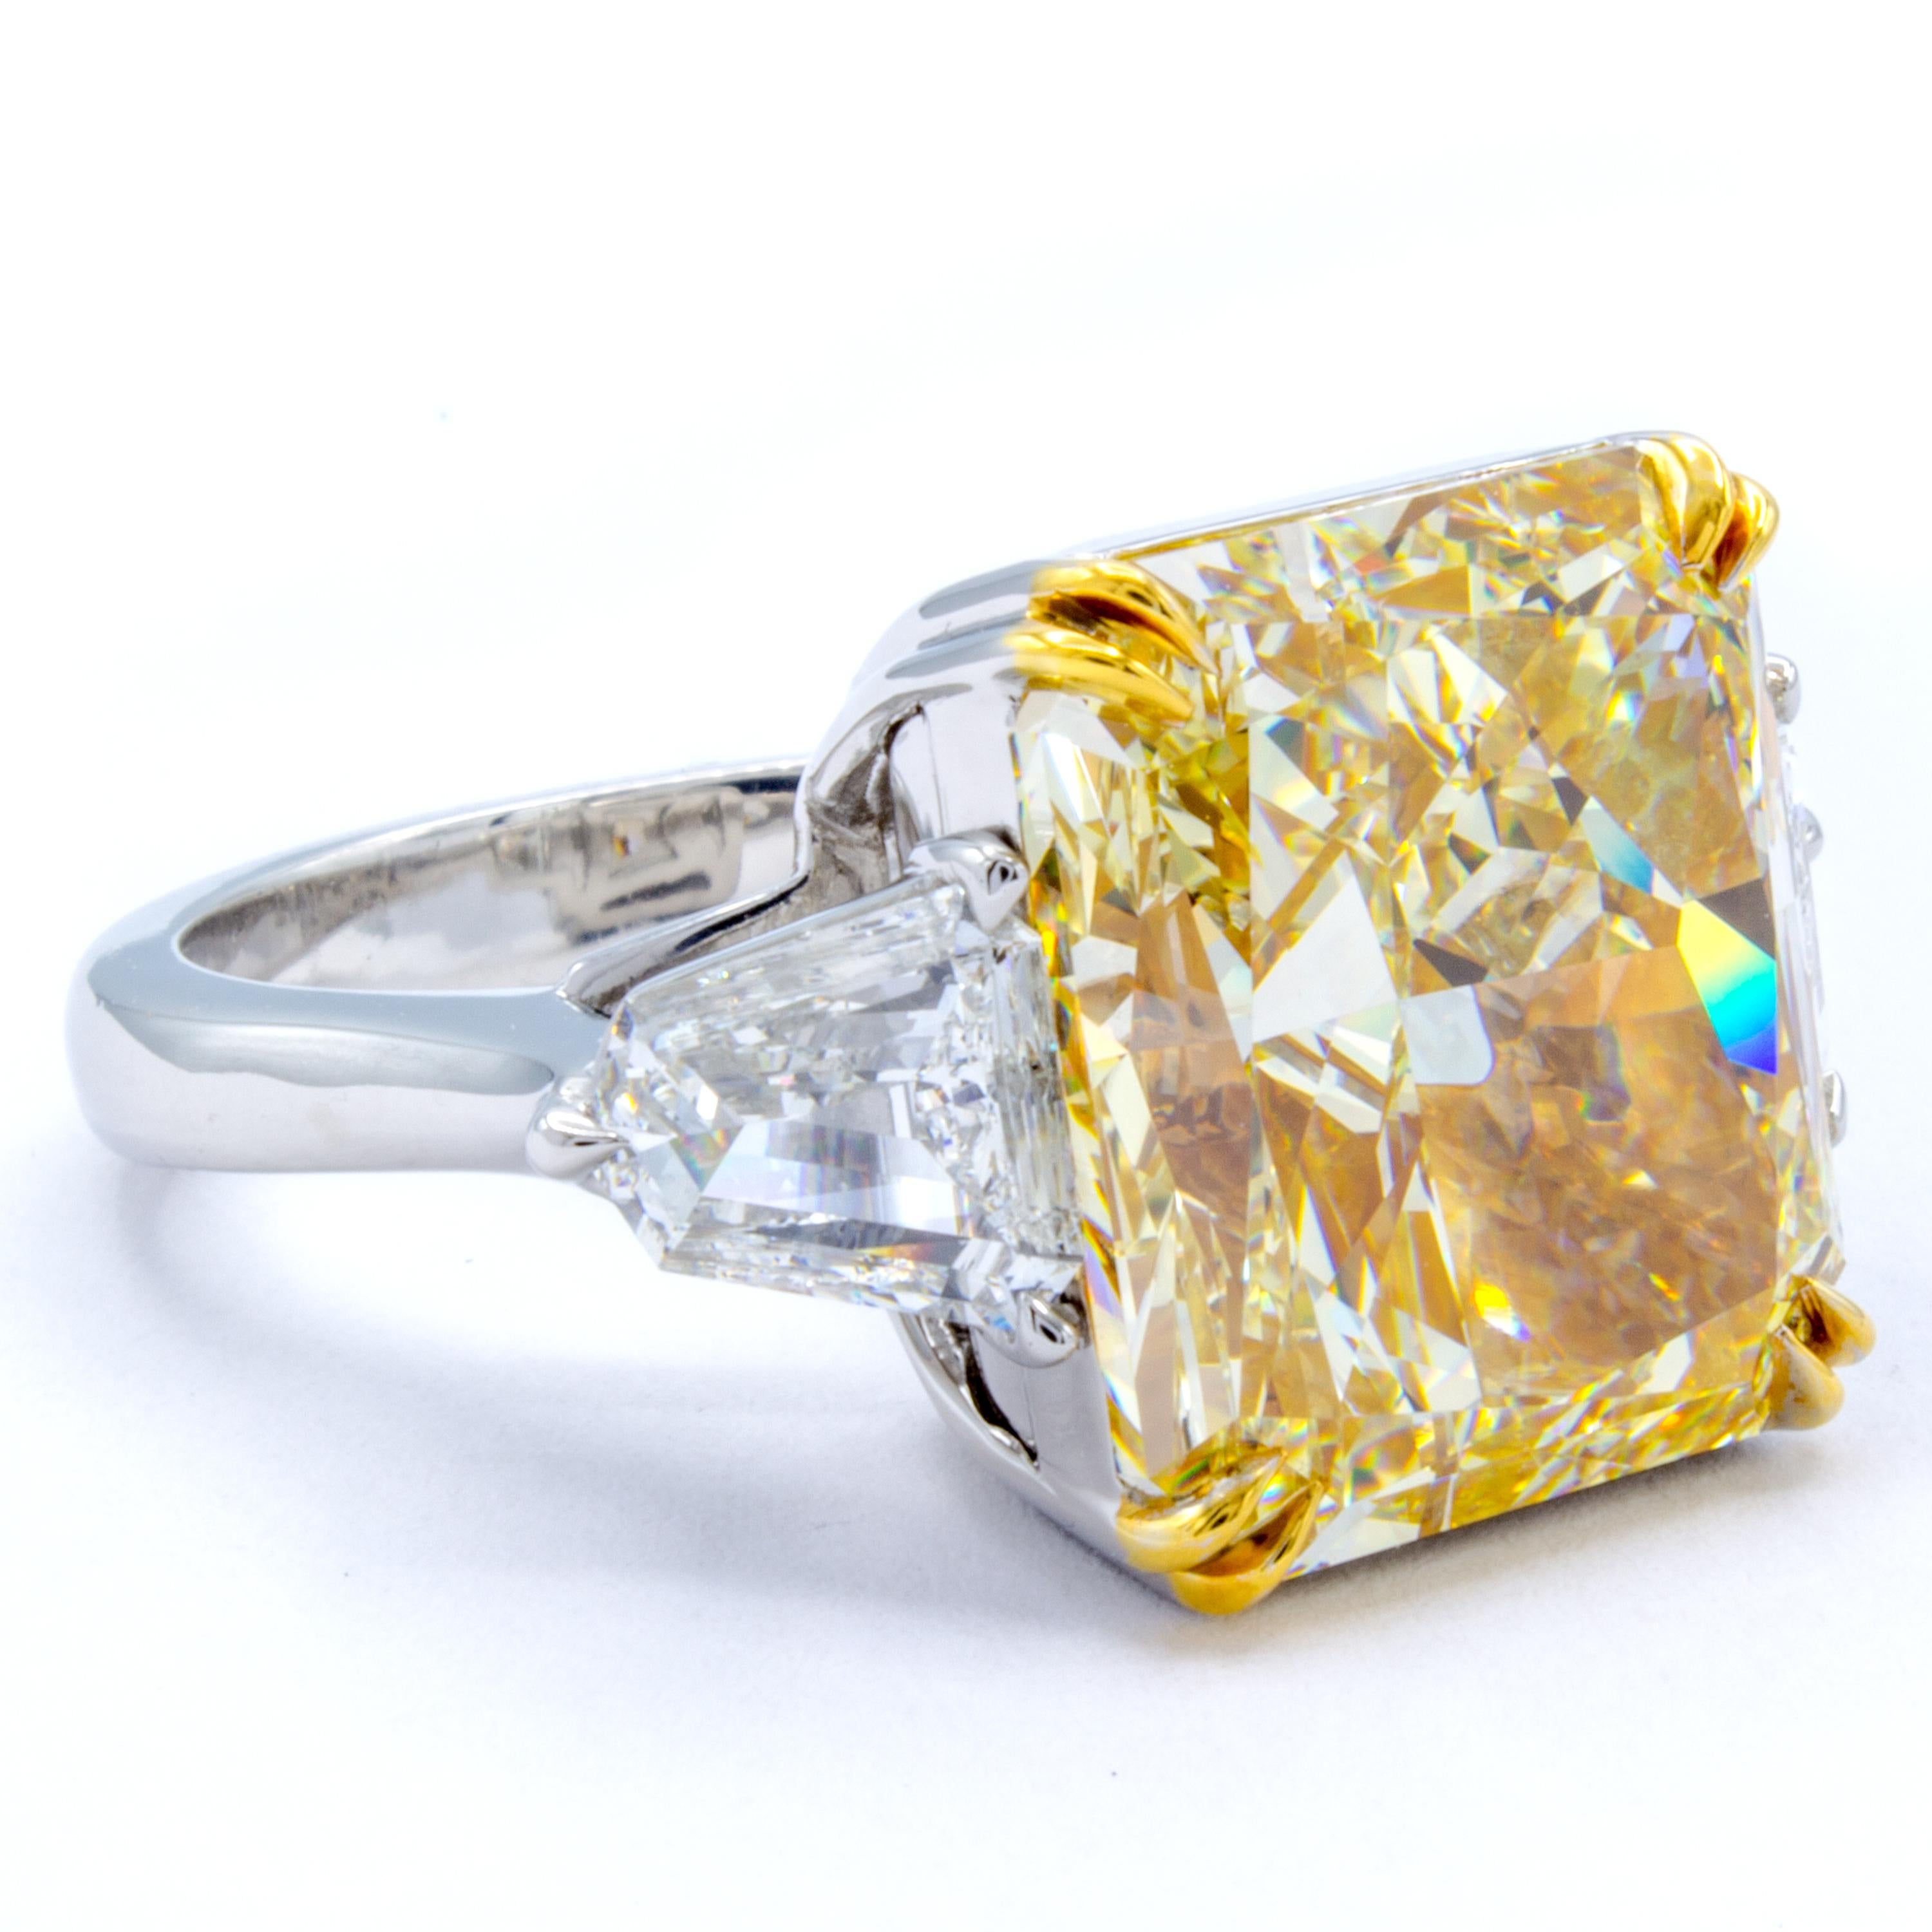 David Rosenberg 13.03 Carat Radiant Light Yellow VS2 GIA Diamond Ring 1